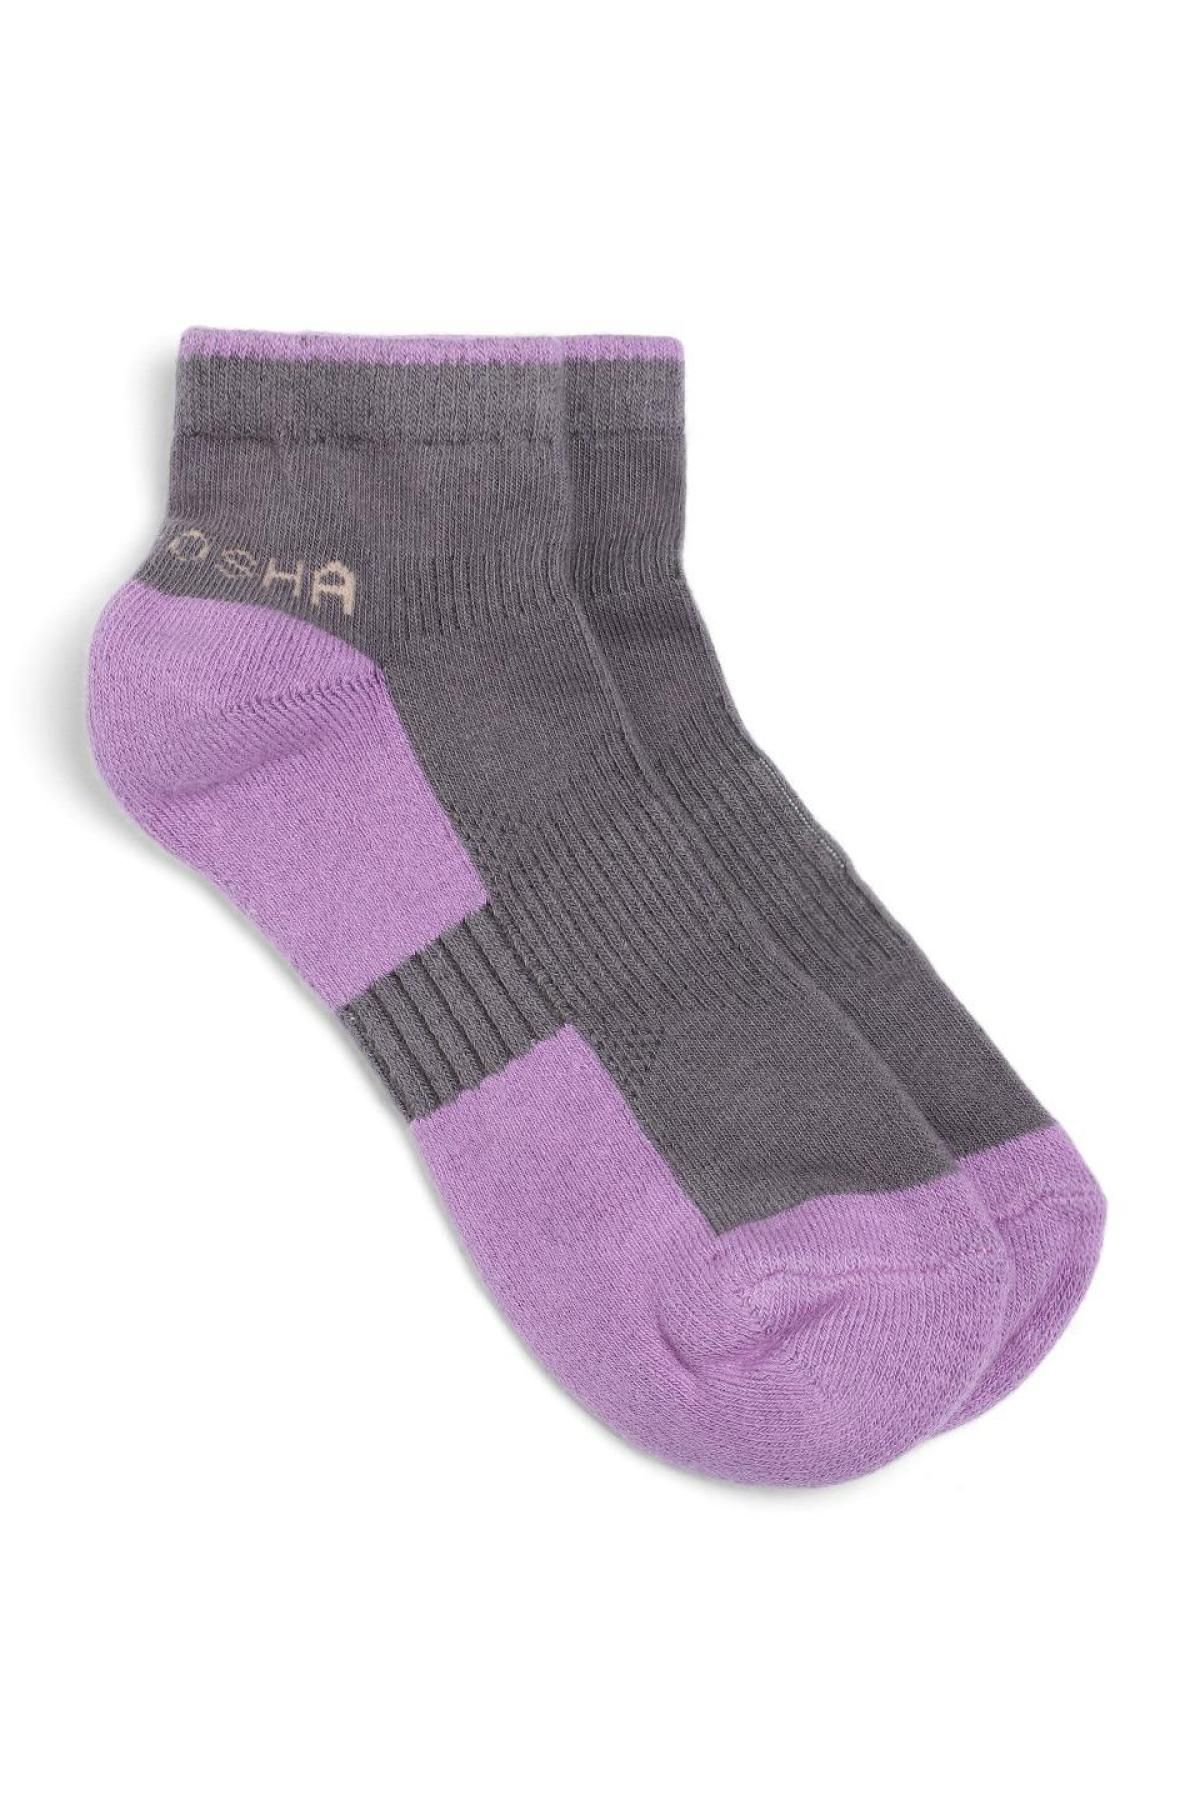 Lilac & Grey Ankle Length Cotton Sports Socks | Women